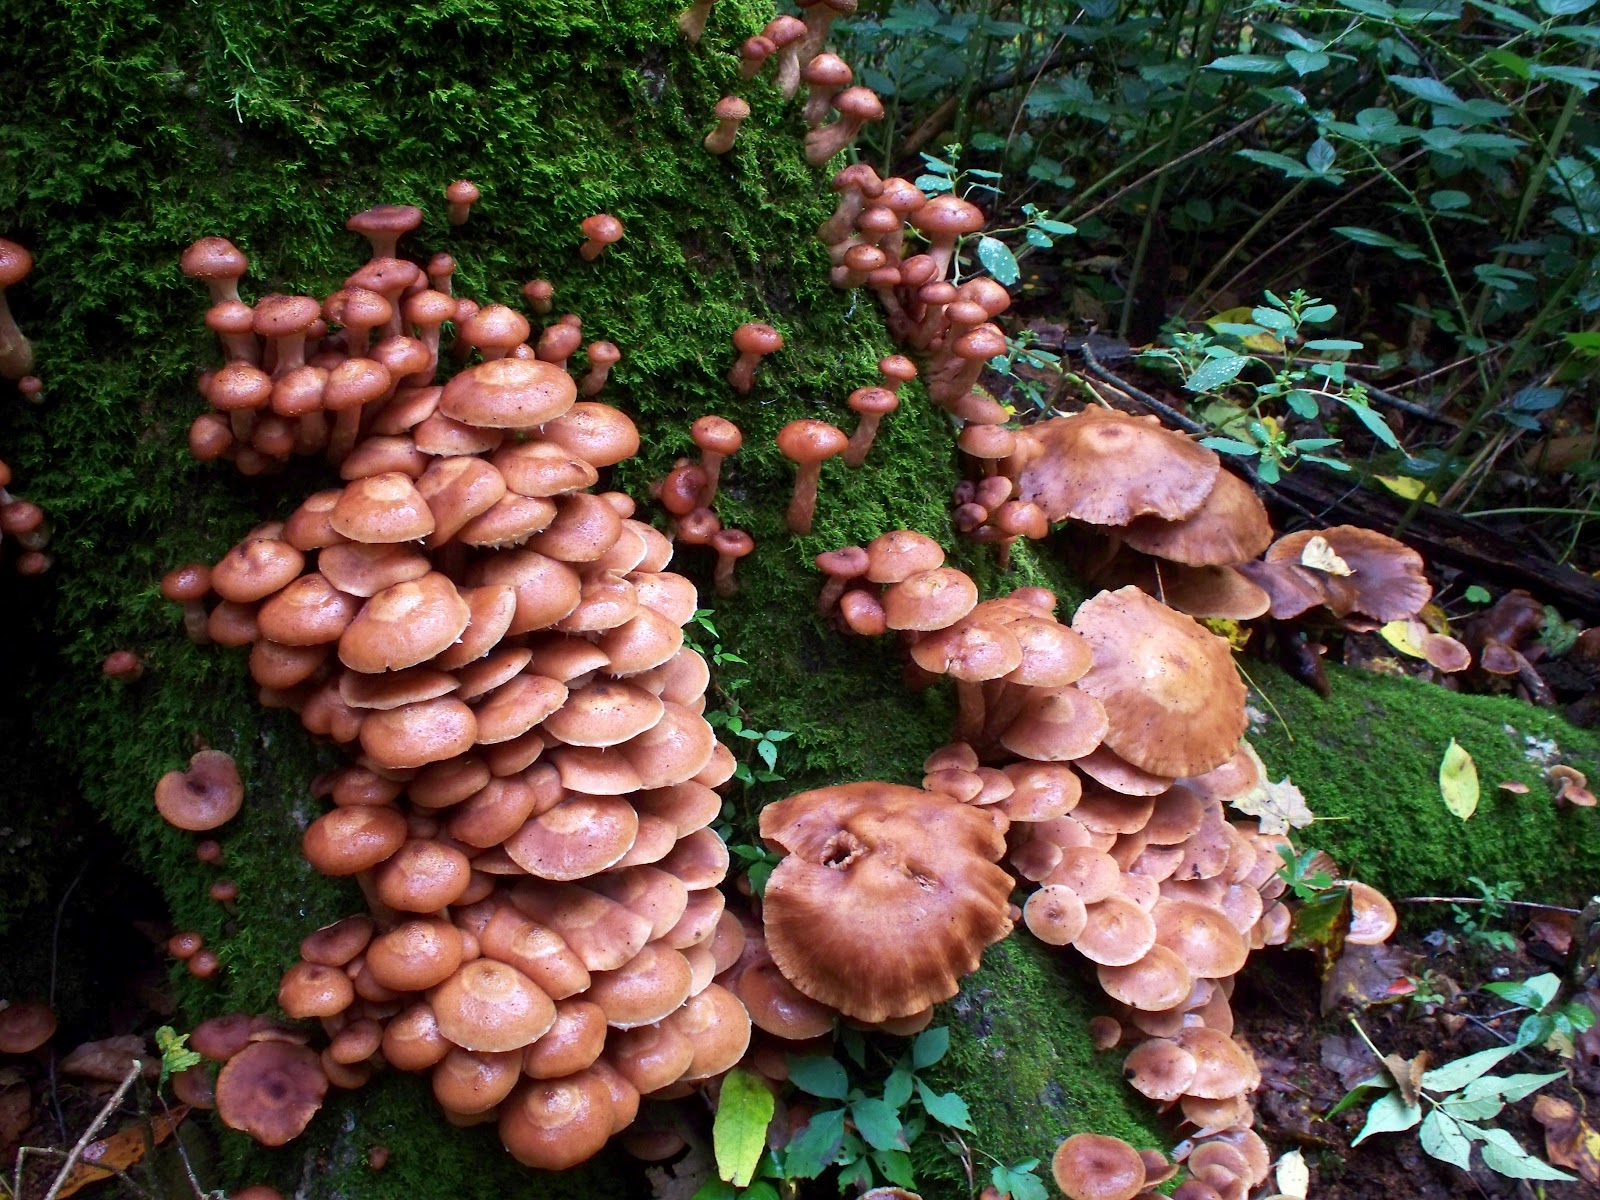 Edible wild mushrooms and plants | A fine WordPress.com site